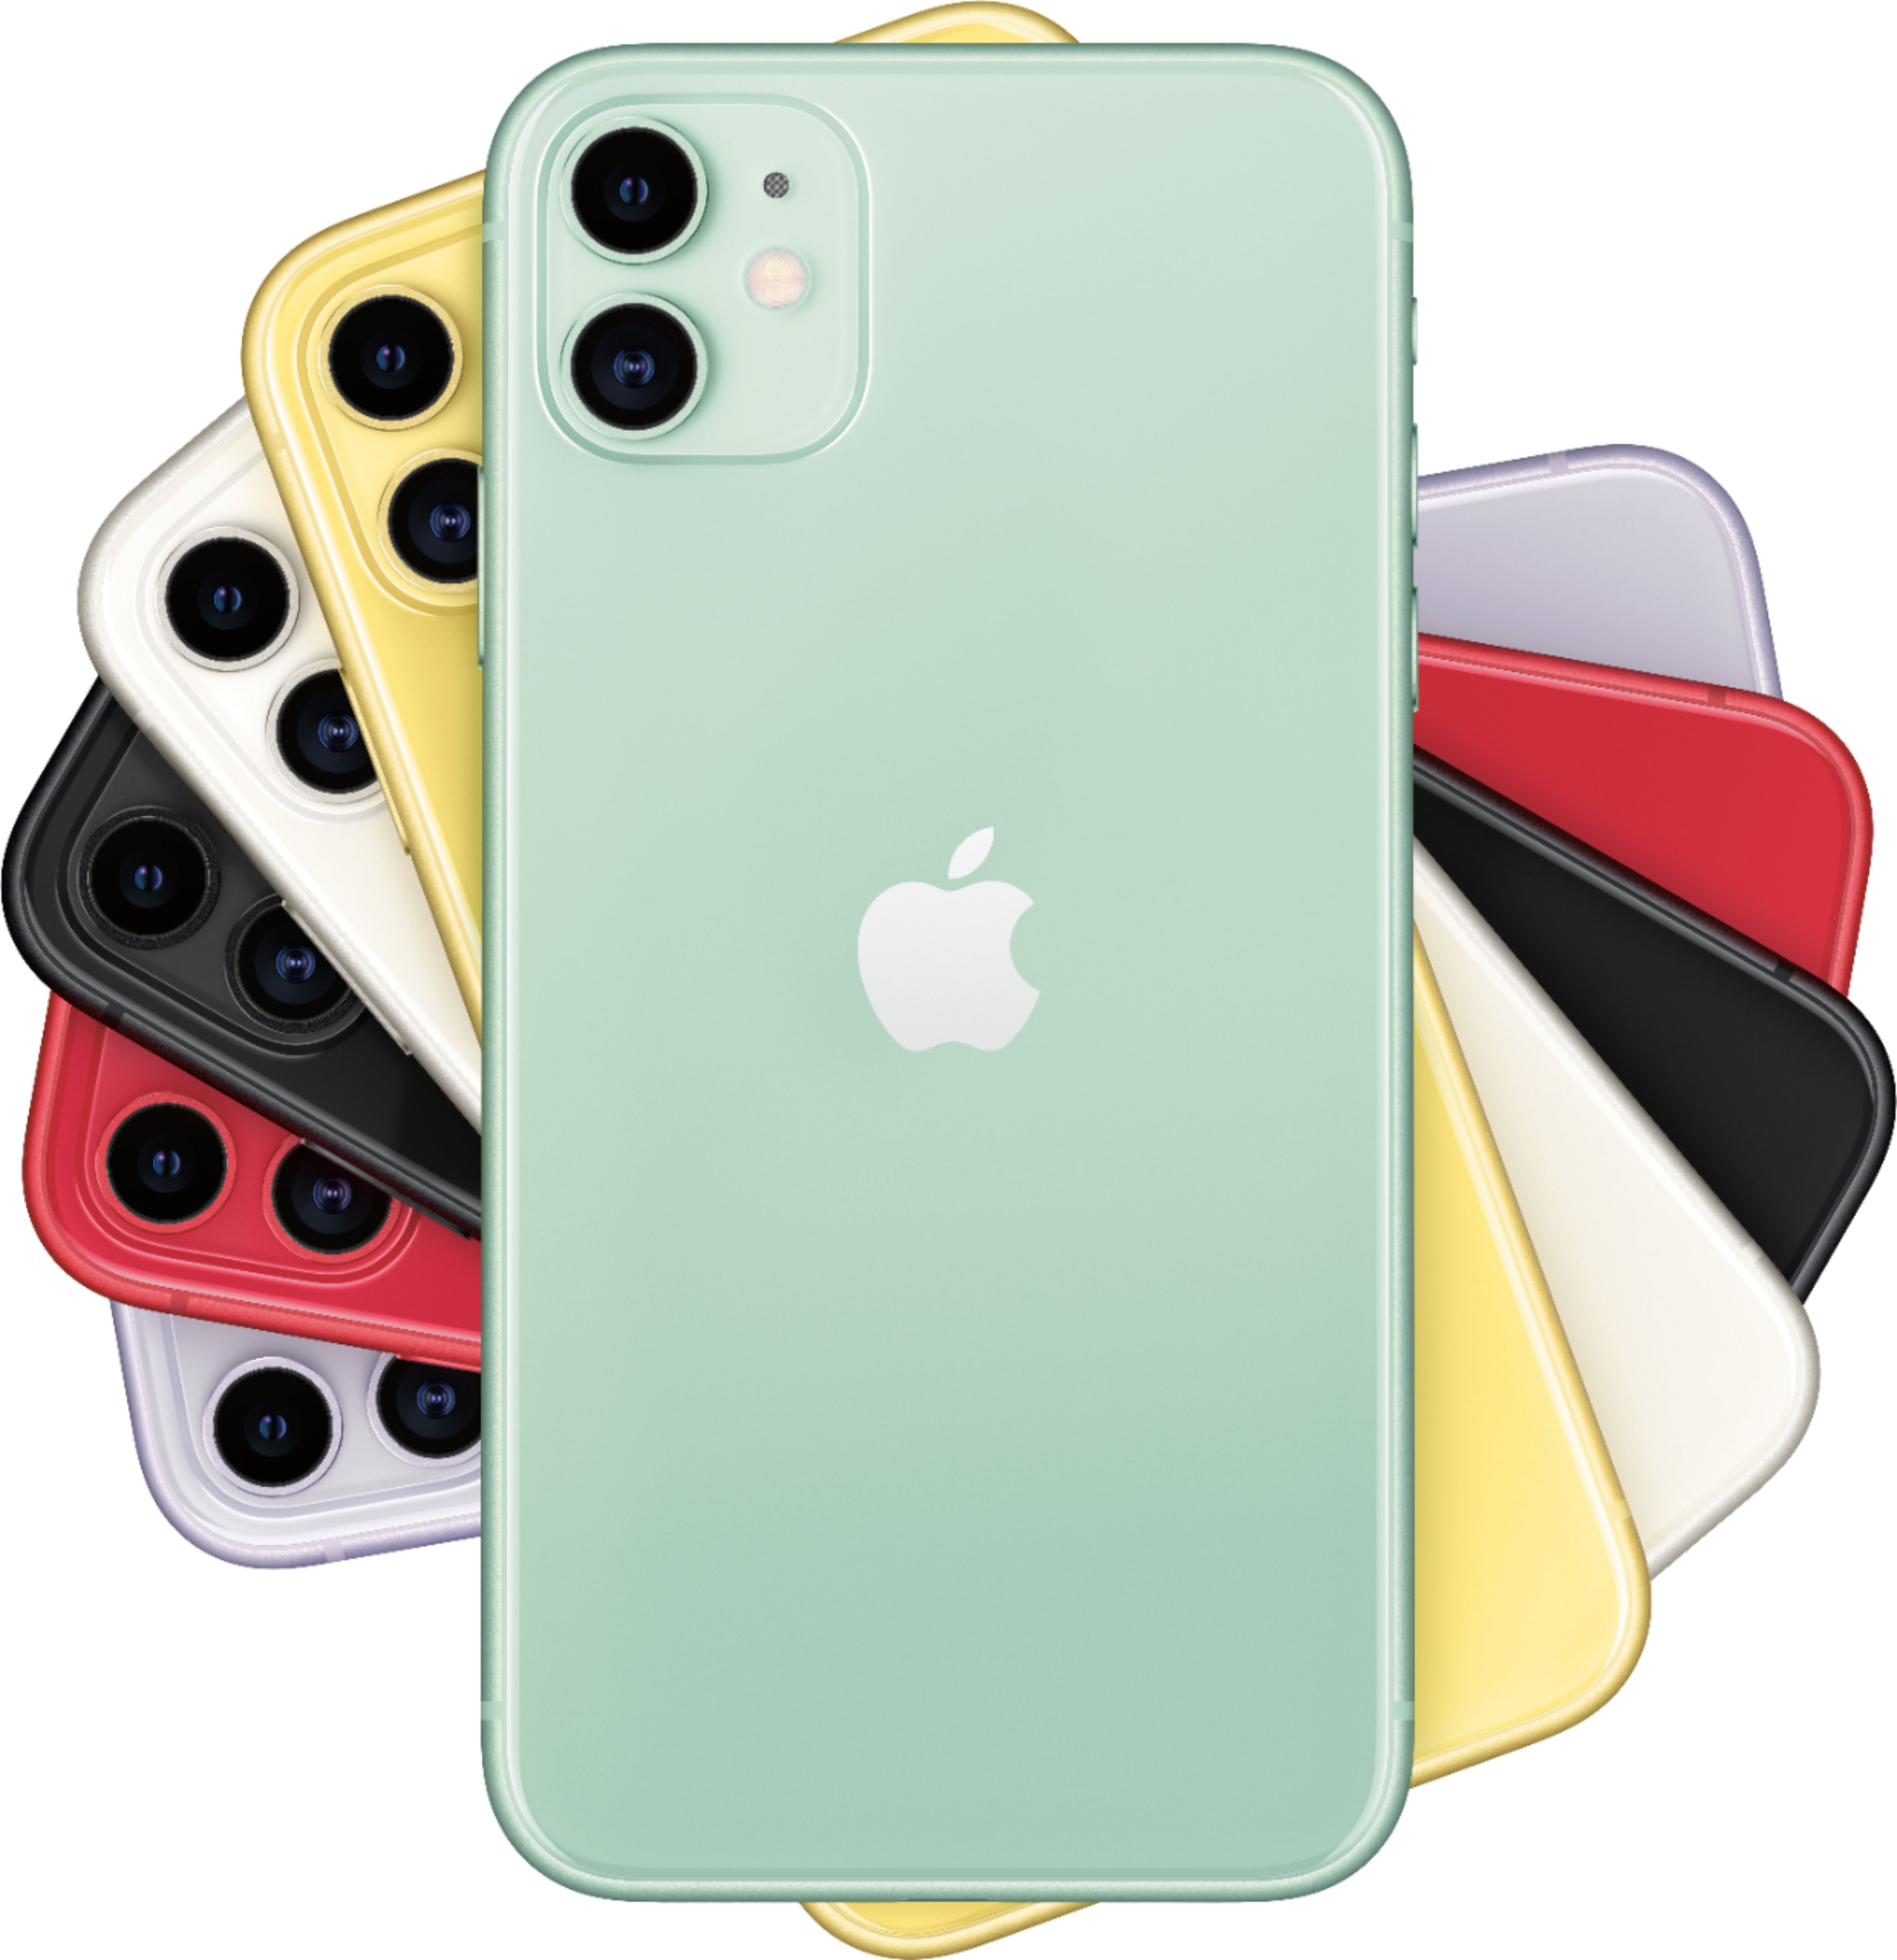 Apple iPhone 11 128GB Green (Verizon) MWLK2LL/A - Best Buy